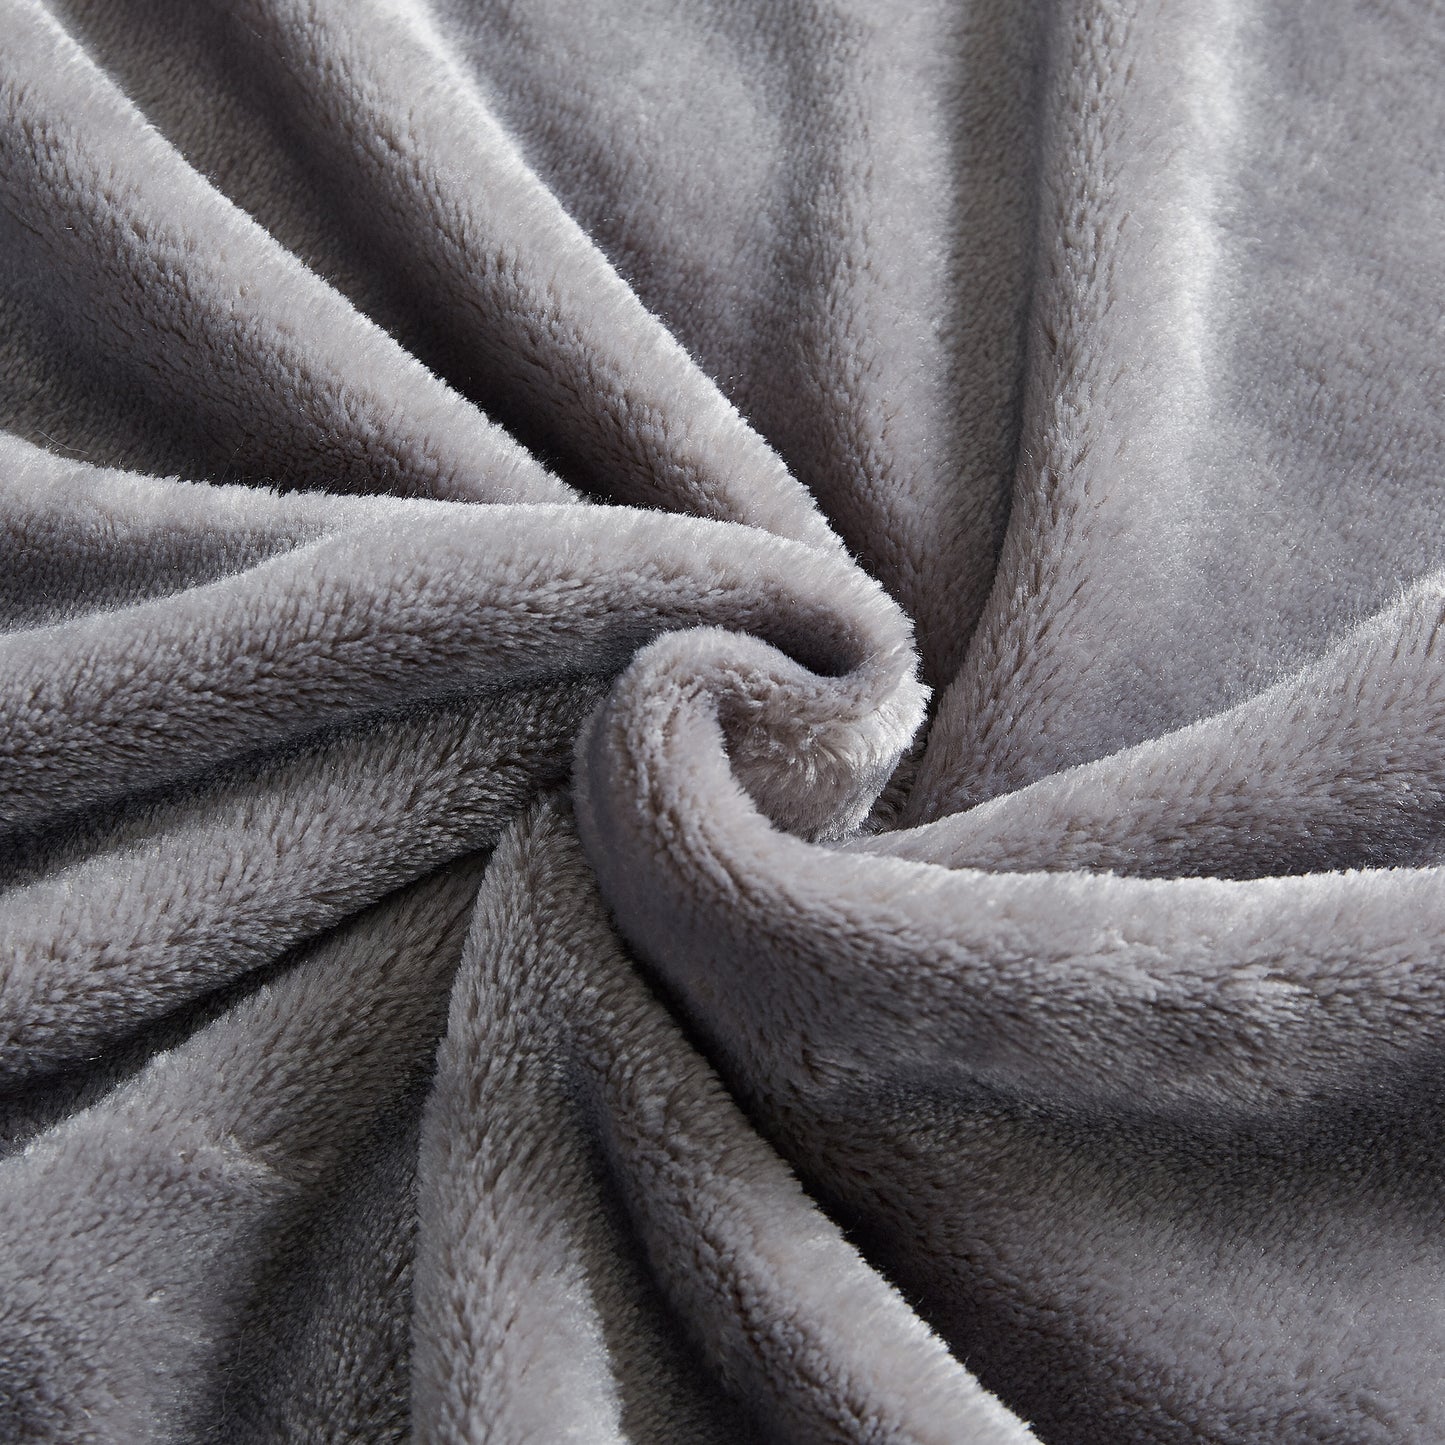 400 Series Solid Plush Blanket - Heather